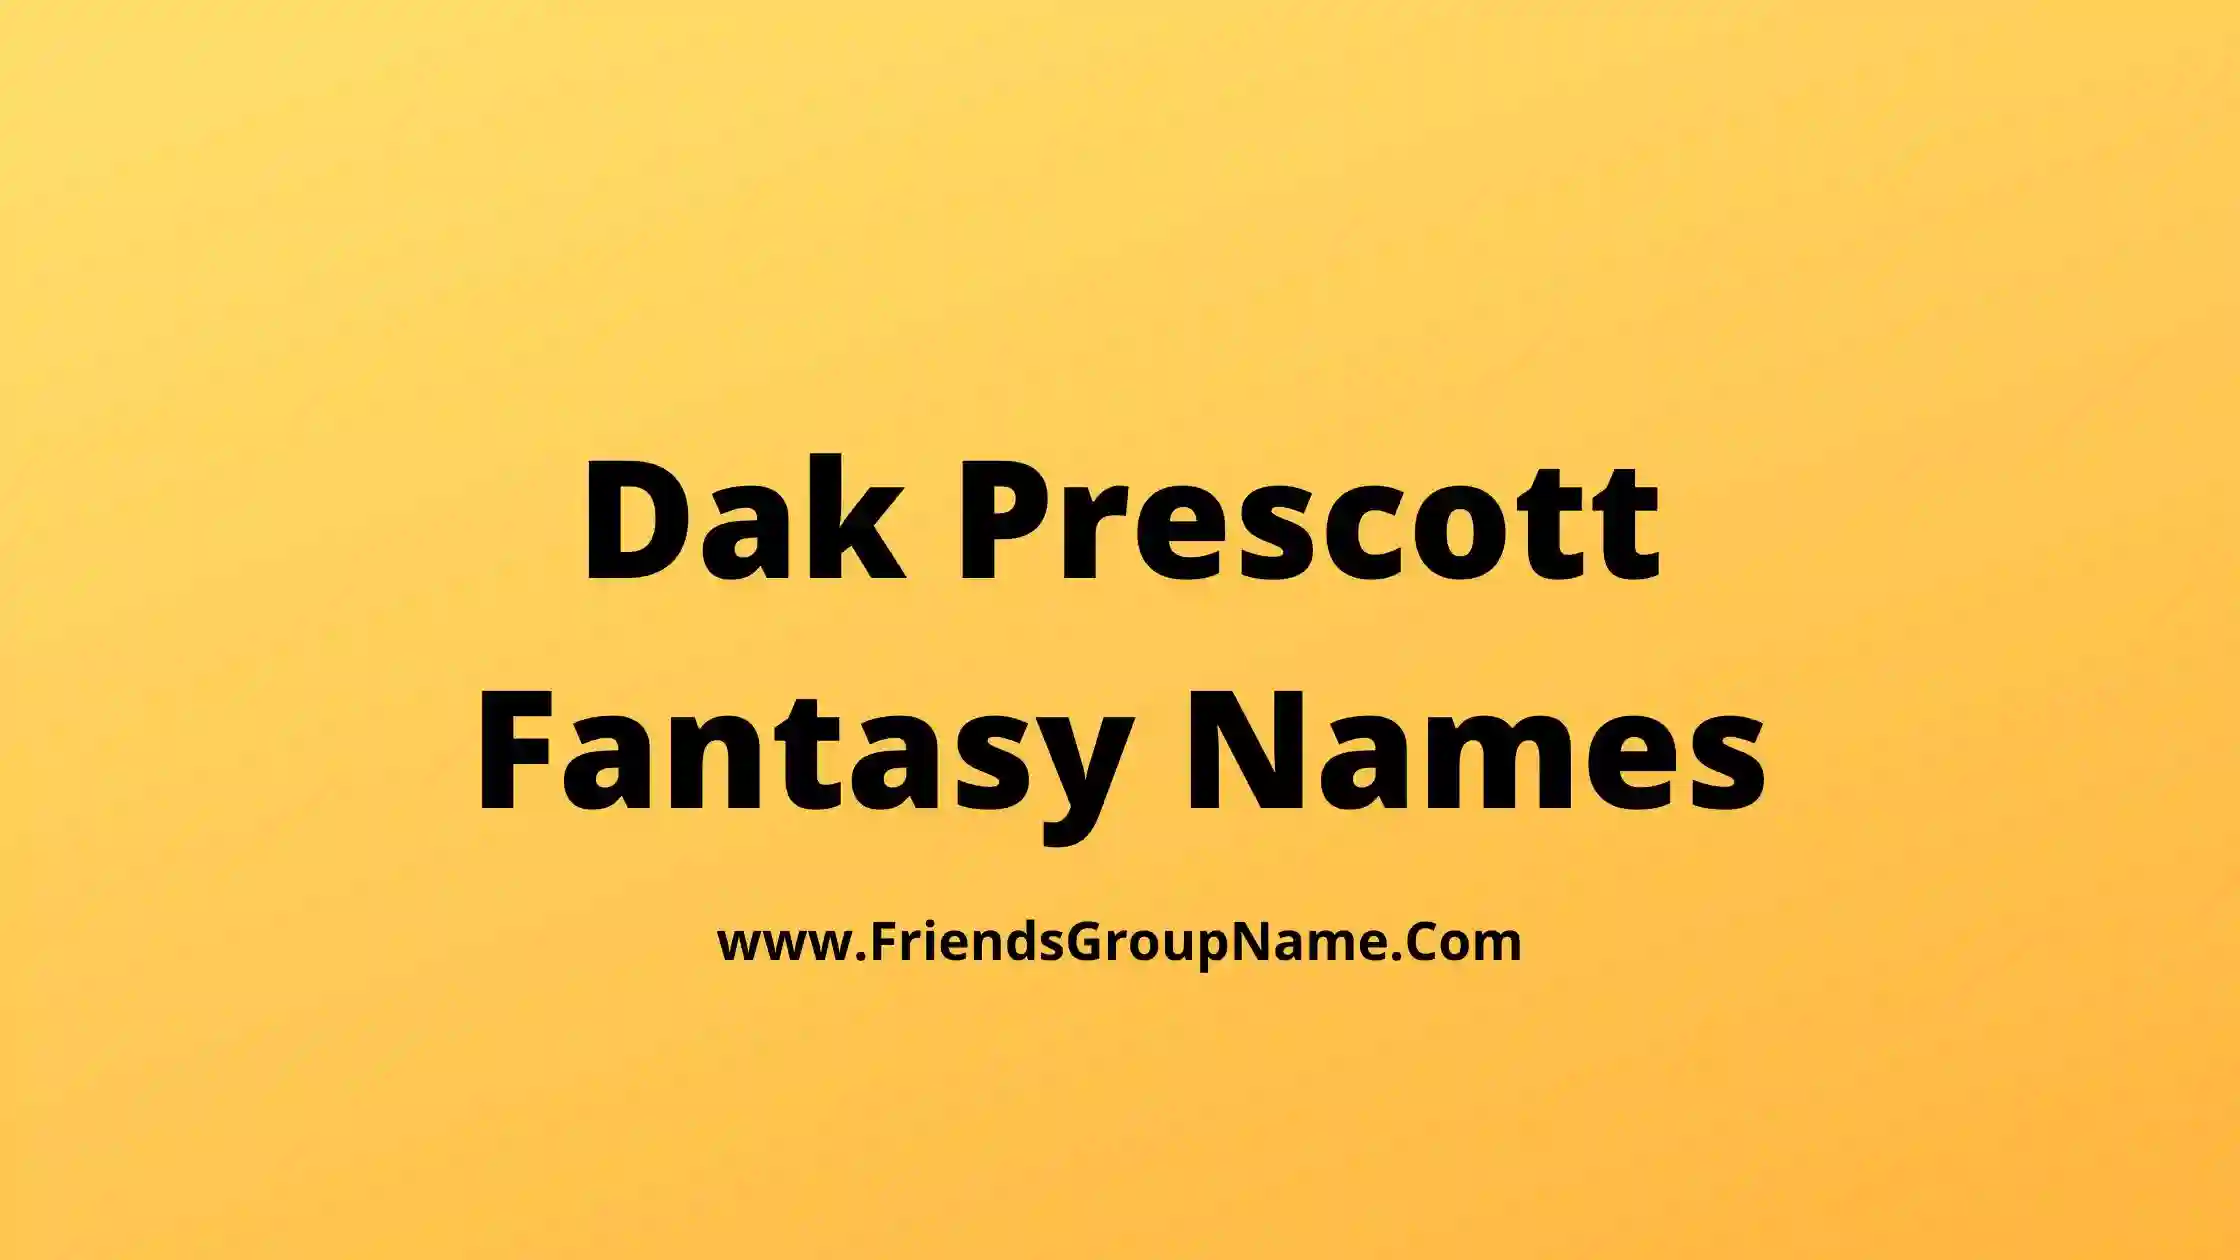 Dak Prescott Fantasy Names